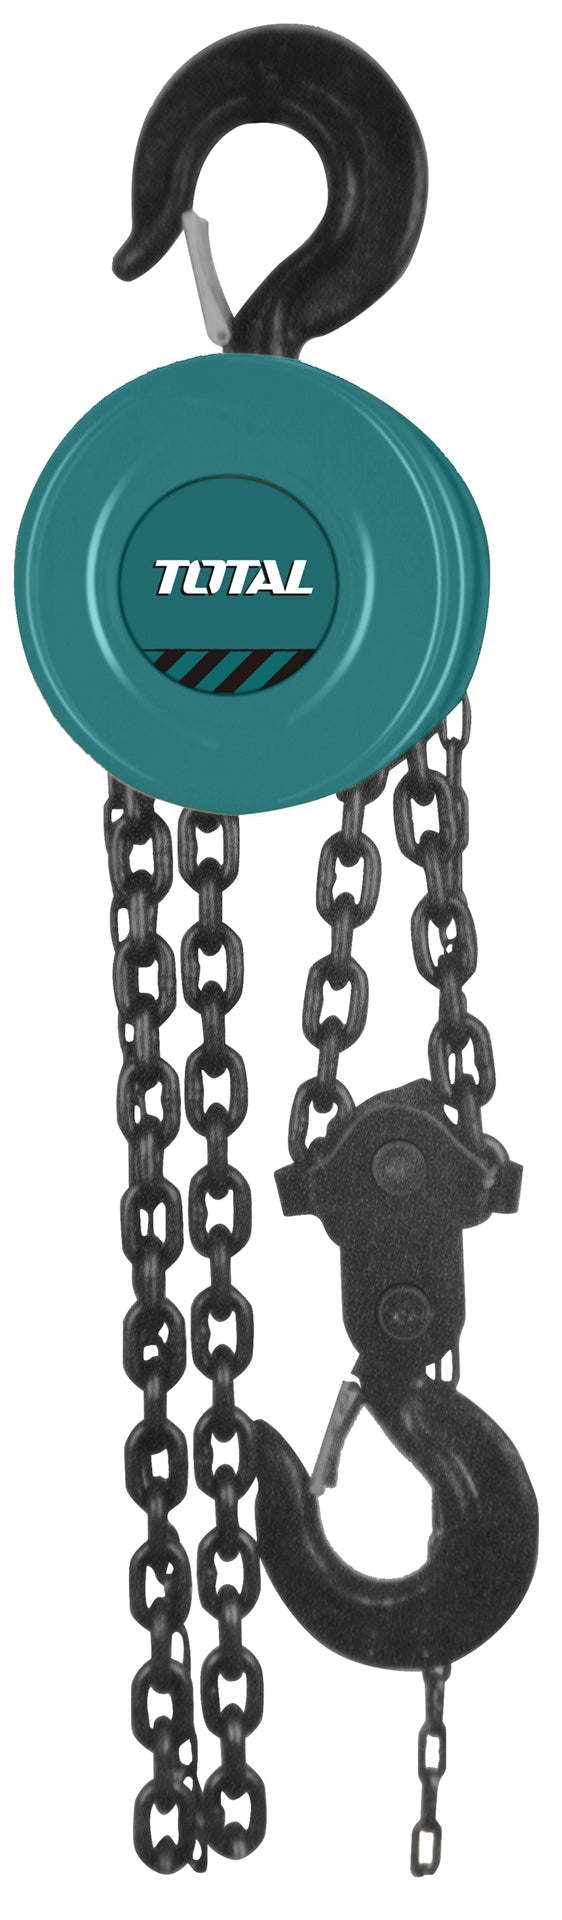 TOTAL Chain Block - 5ton